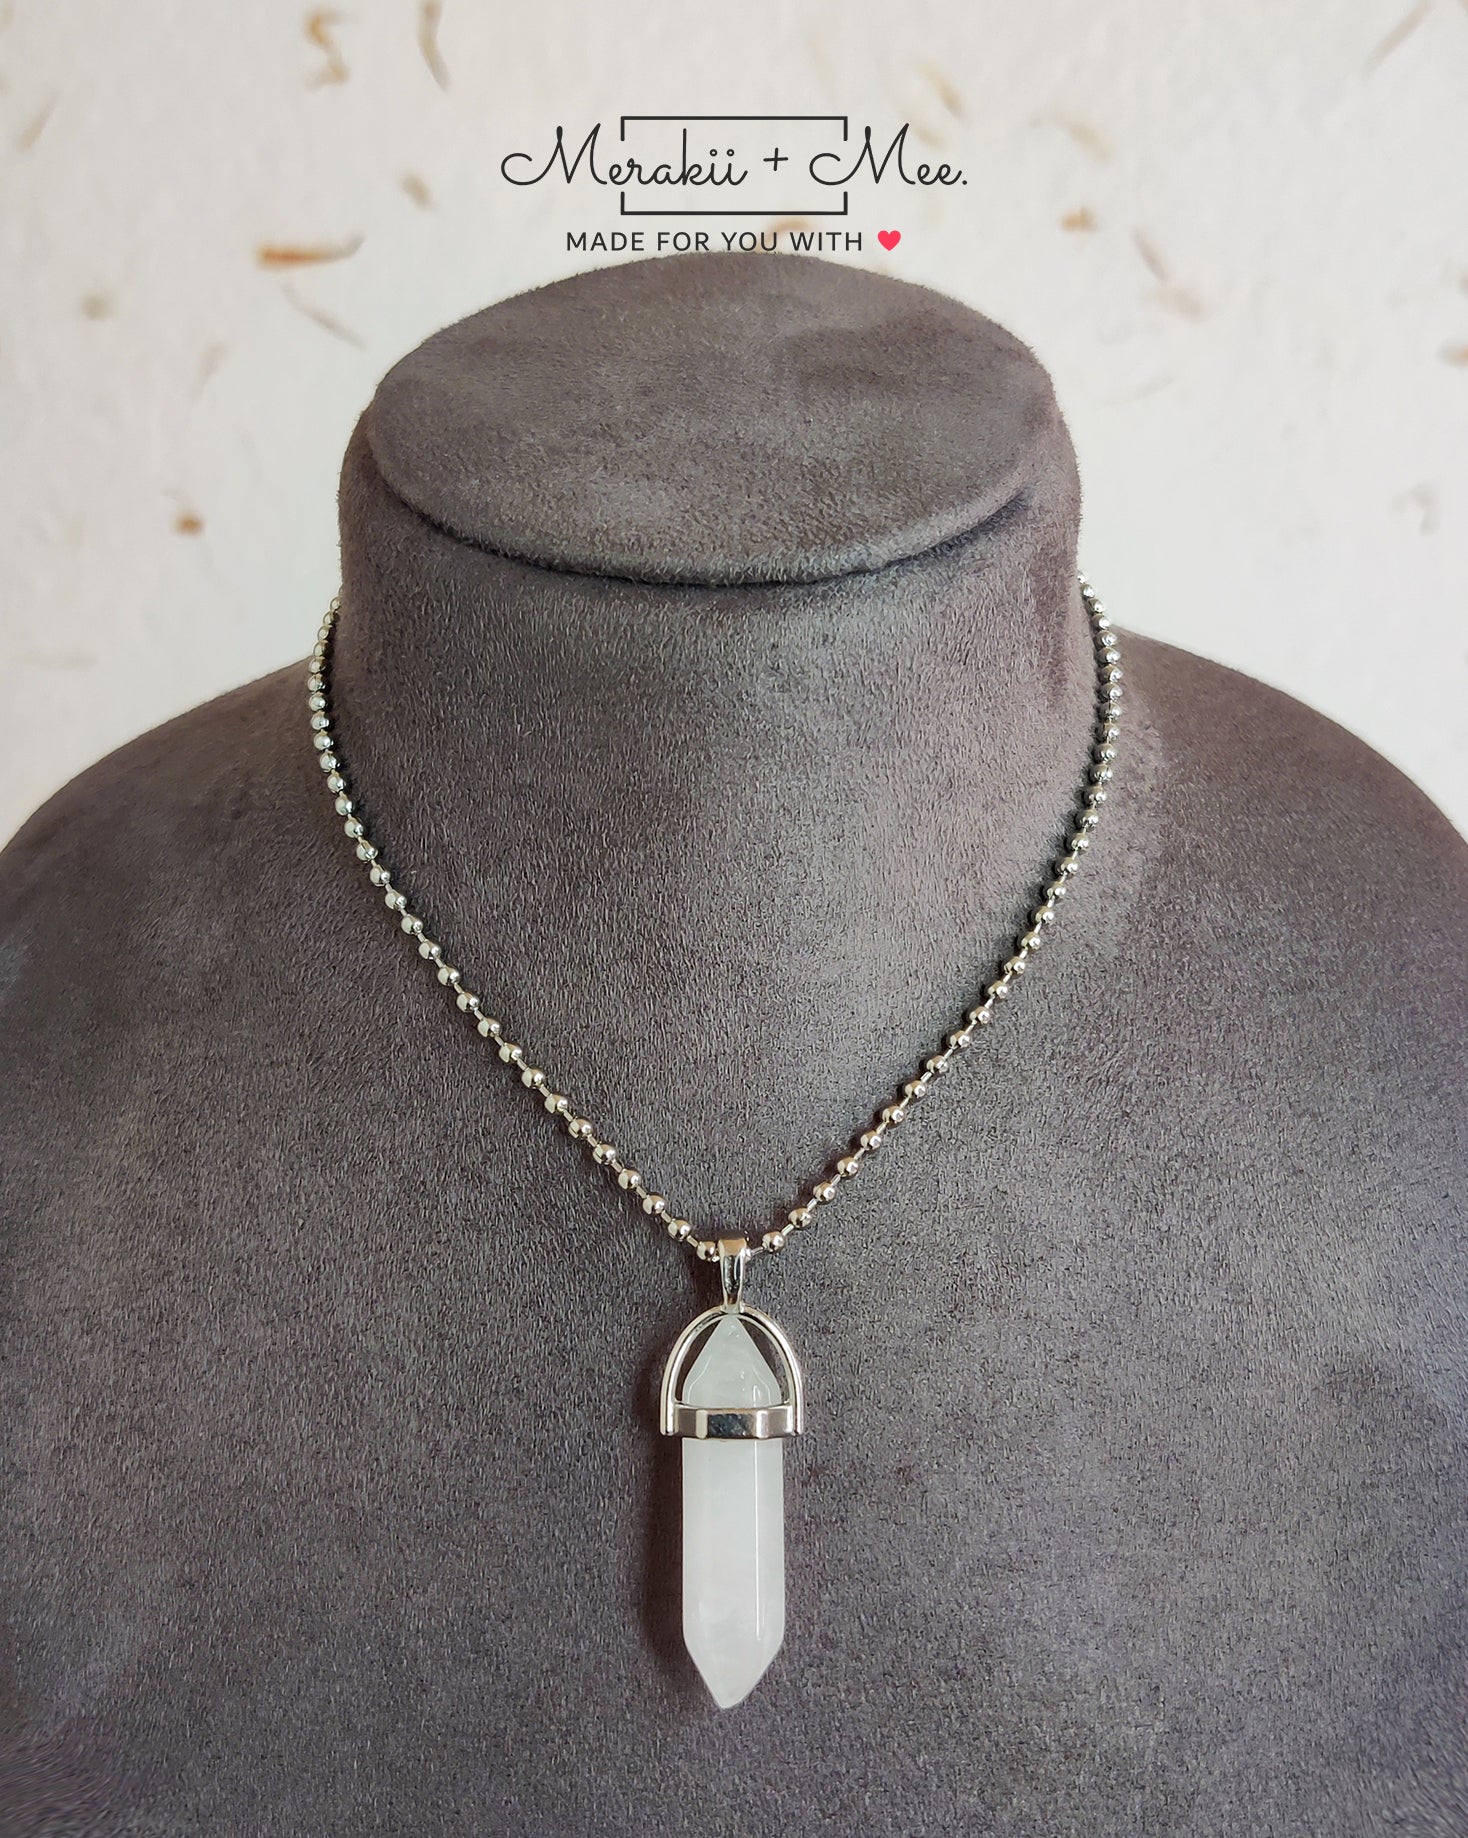 Buy MYADDICTION Charm Opal Crystal Swan Pendant Necklace Rhinestone Sweater  Chain Necklace Jewelry & Watches | Fashion Jewelry | Necklaces & Pendants  at Amazon.in